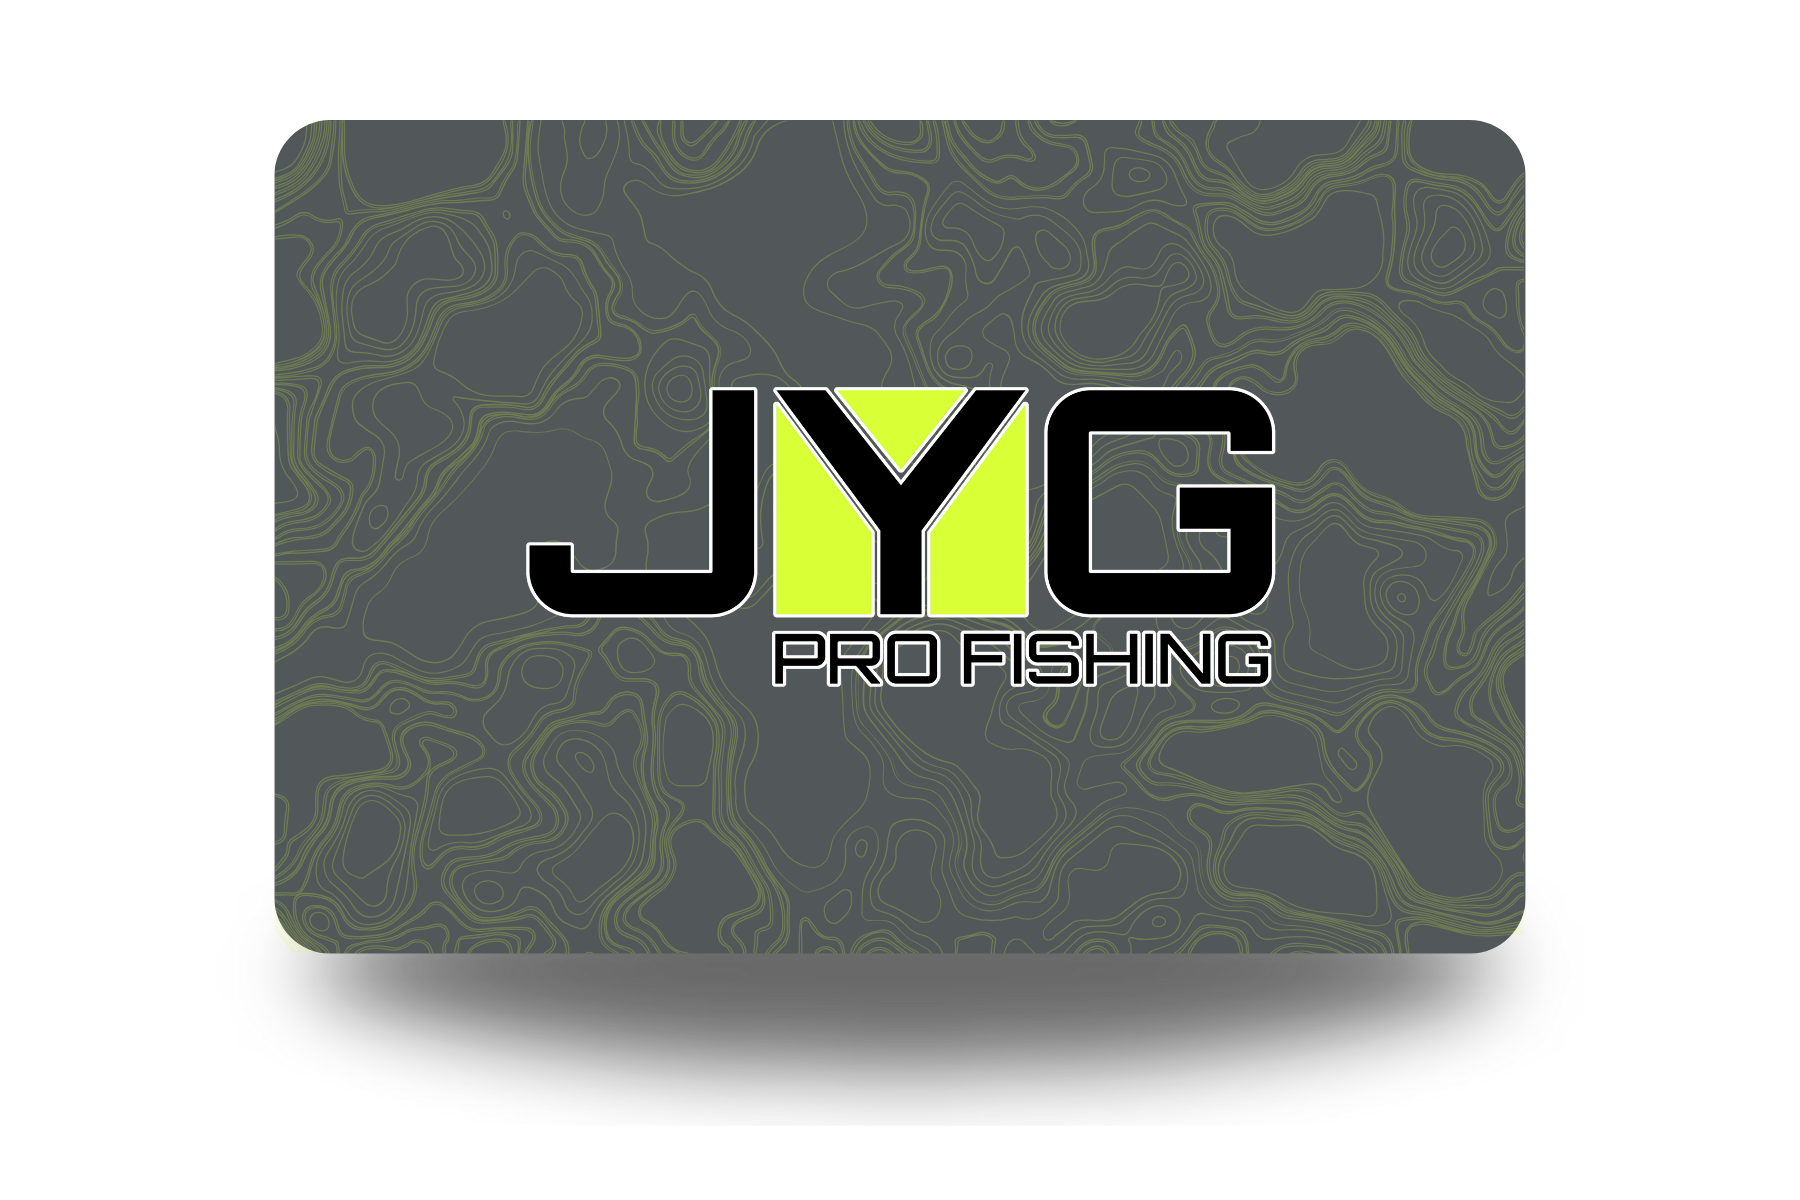 JYG Pro Gift Card – JYG PROFISHING